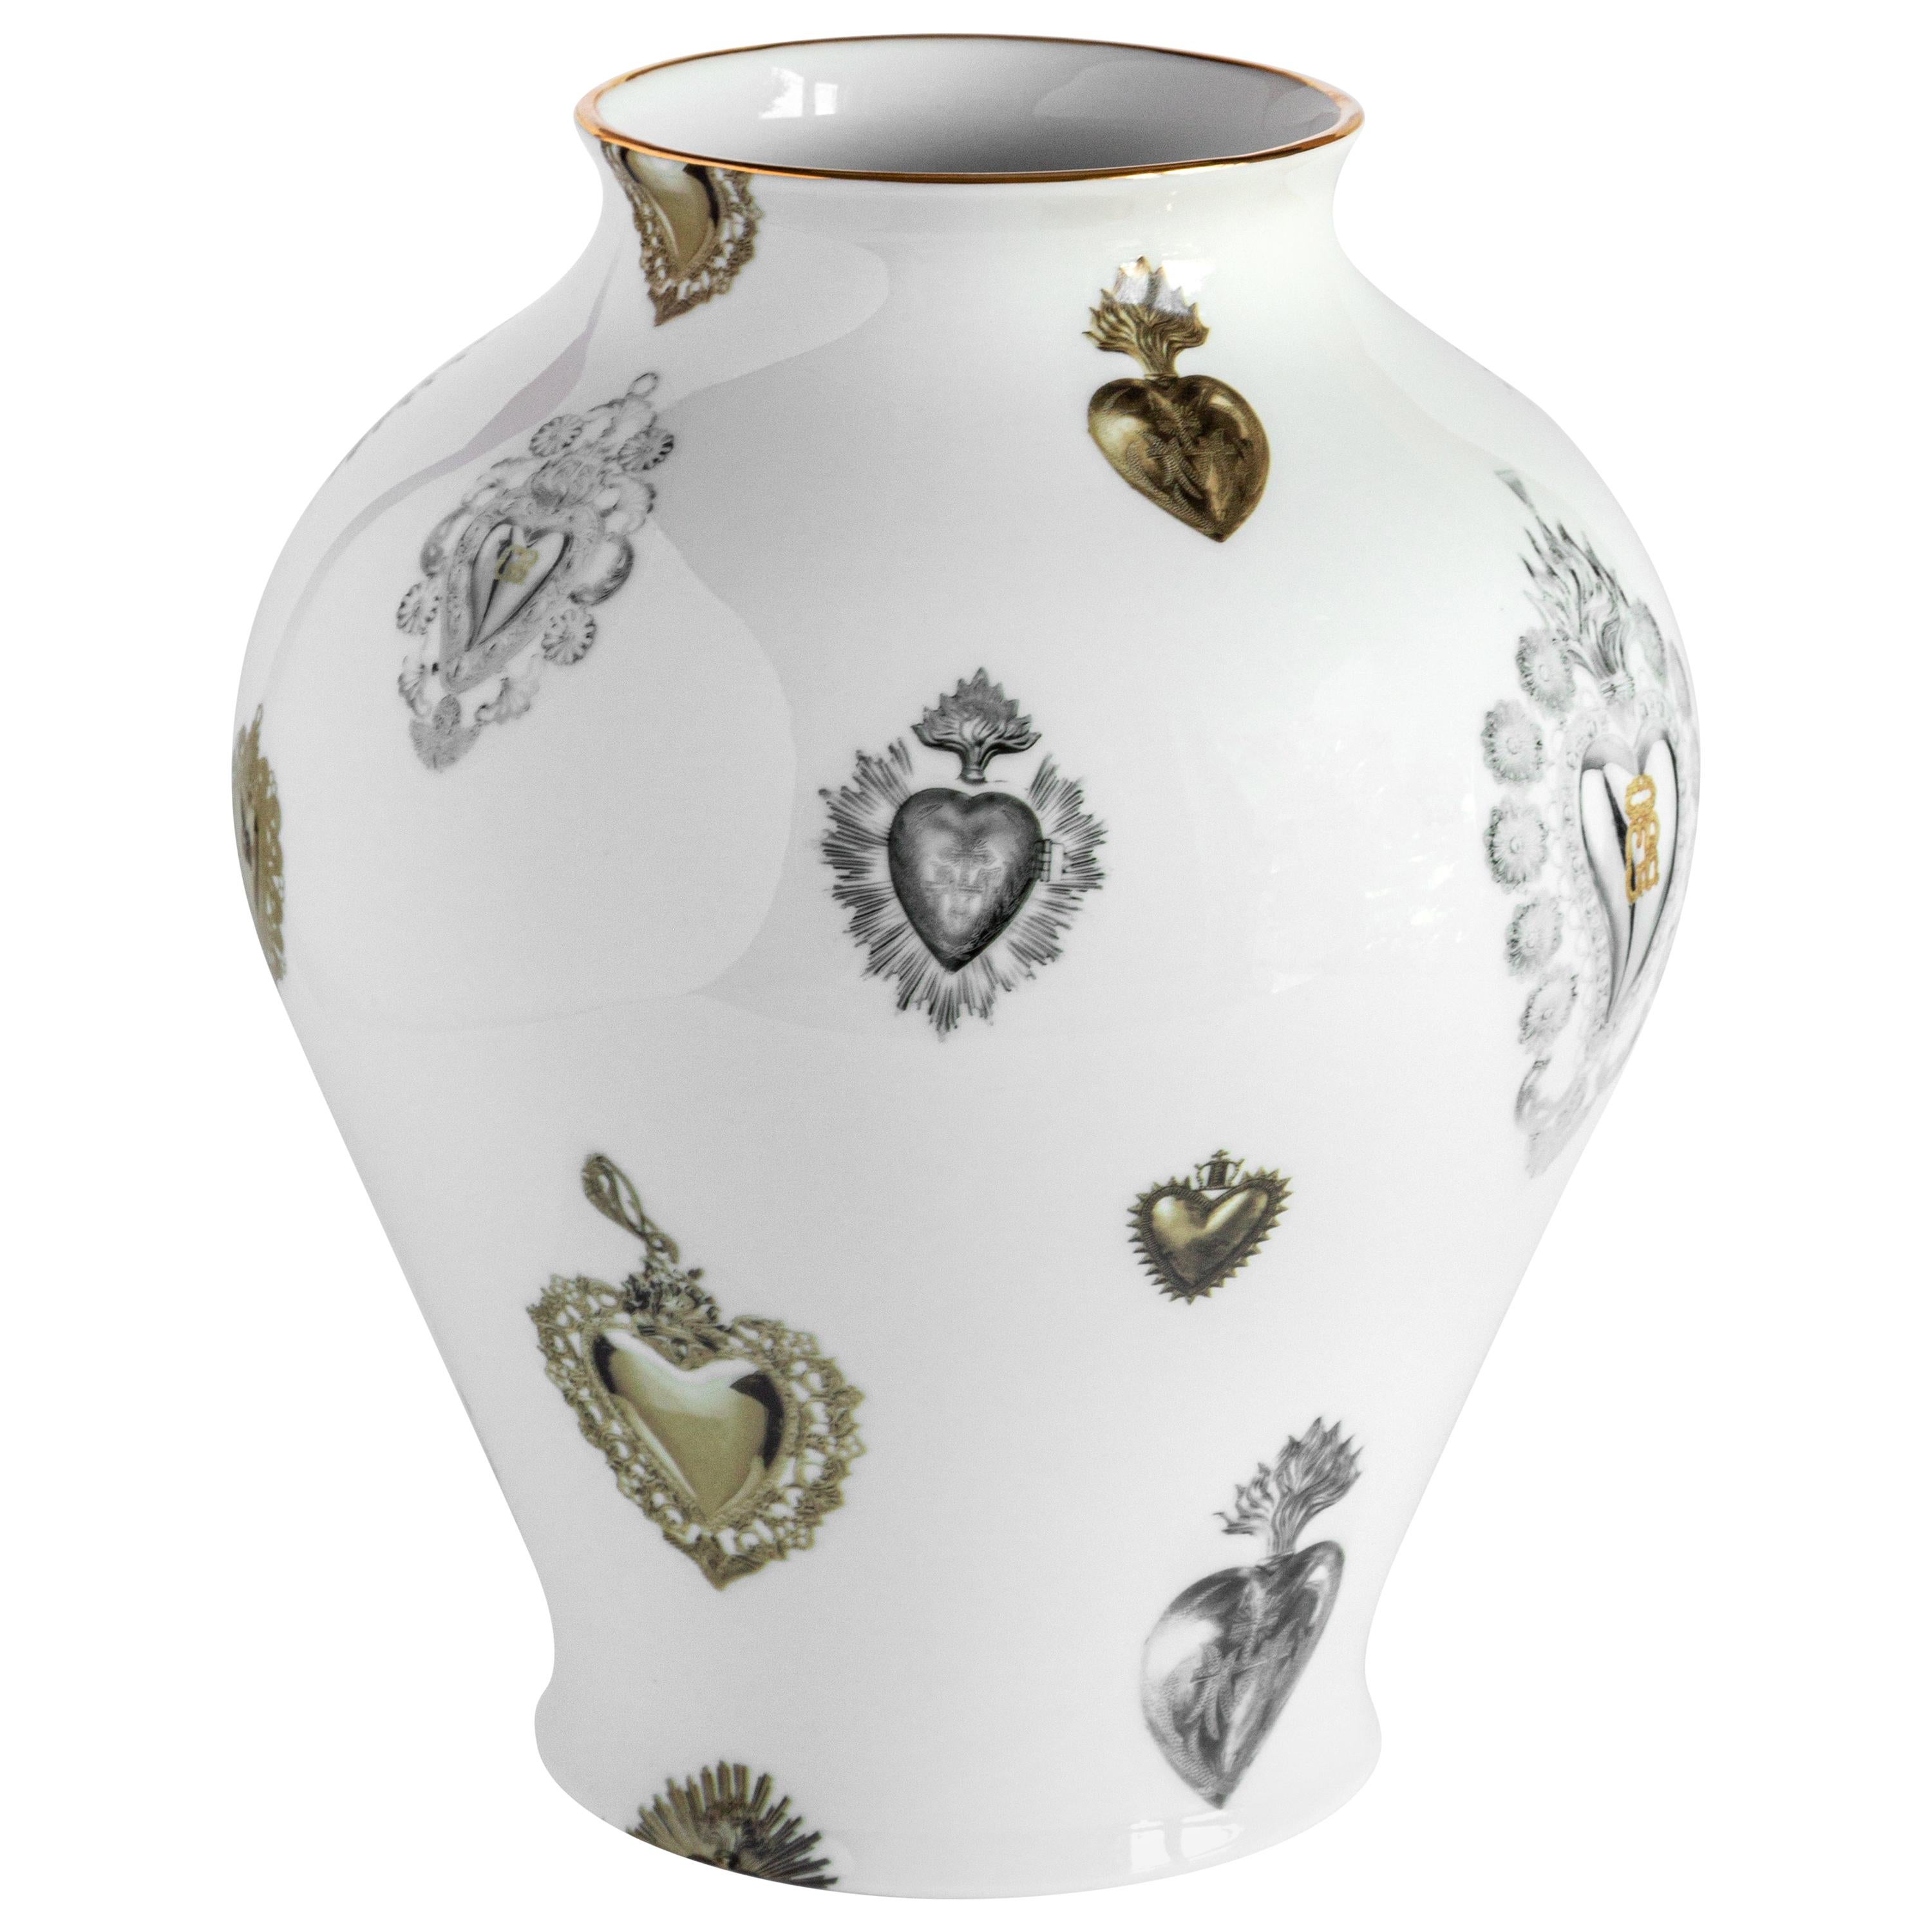 Ex Voto, Contemporary Porcelain Vase with Decorative Design by Vito Nesta For Sale